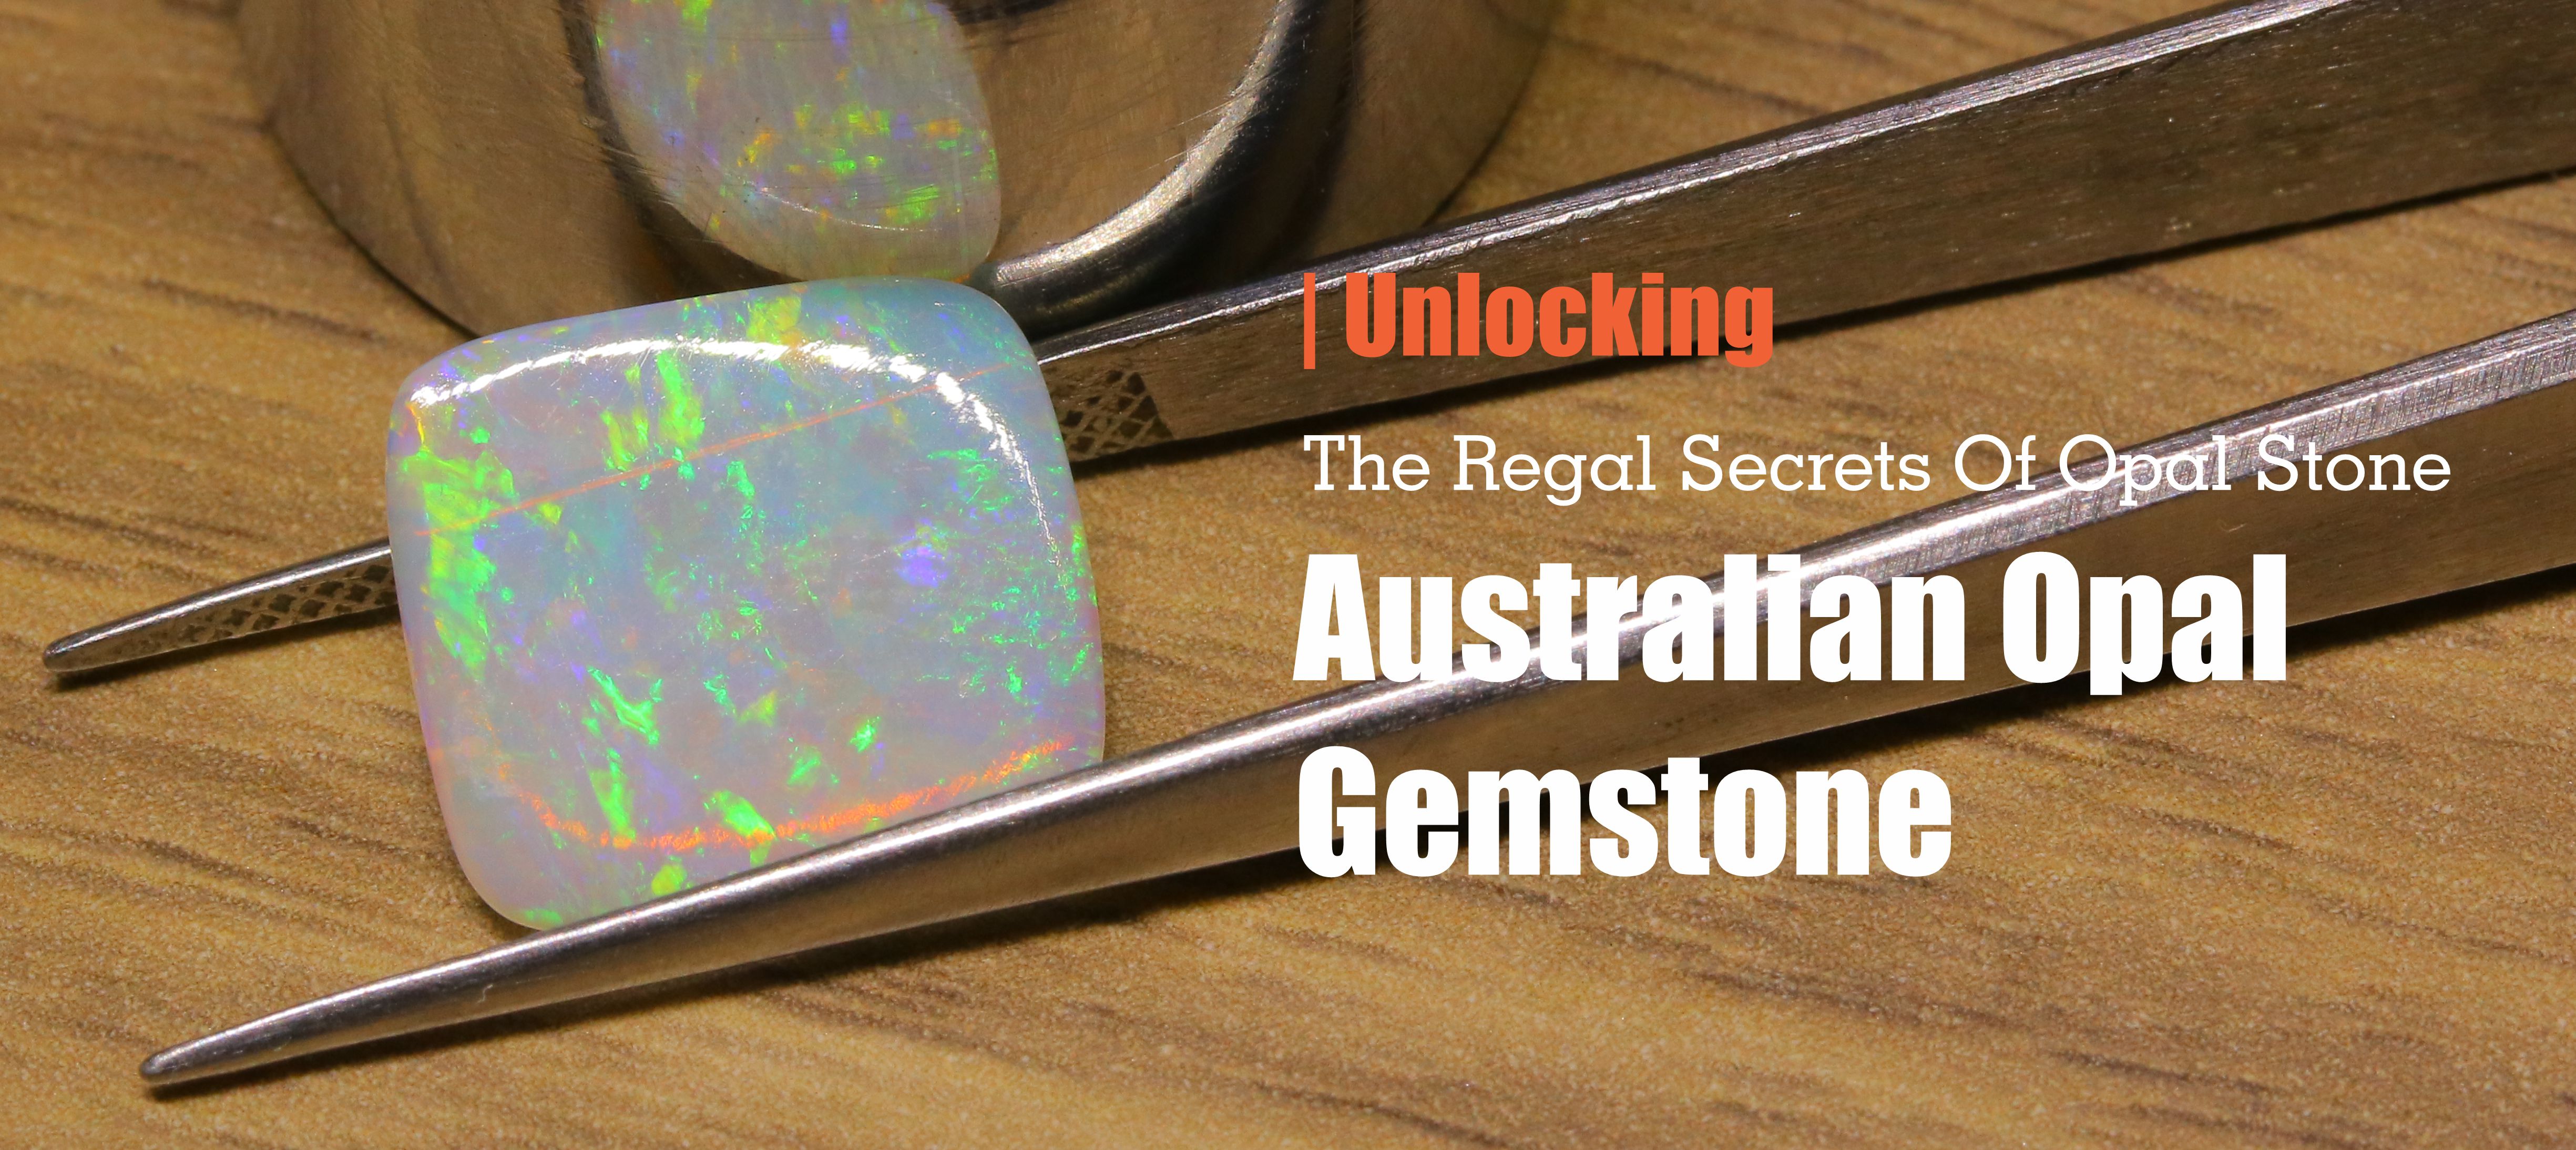 unlocking-the-regal-secrets-1.jpg